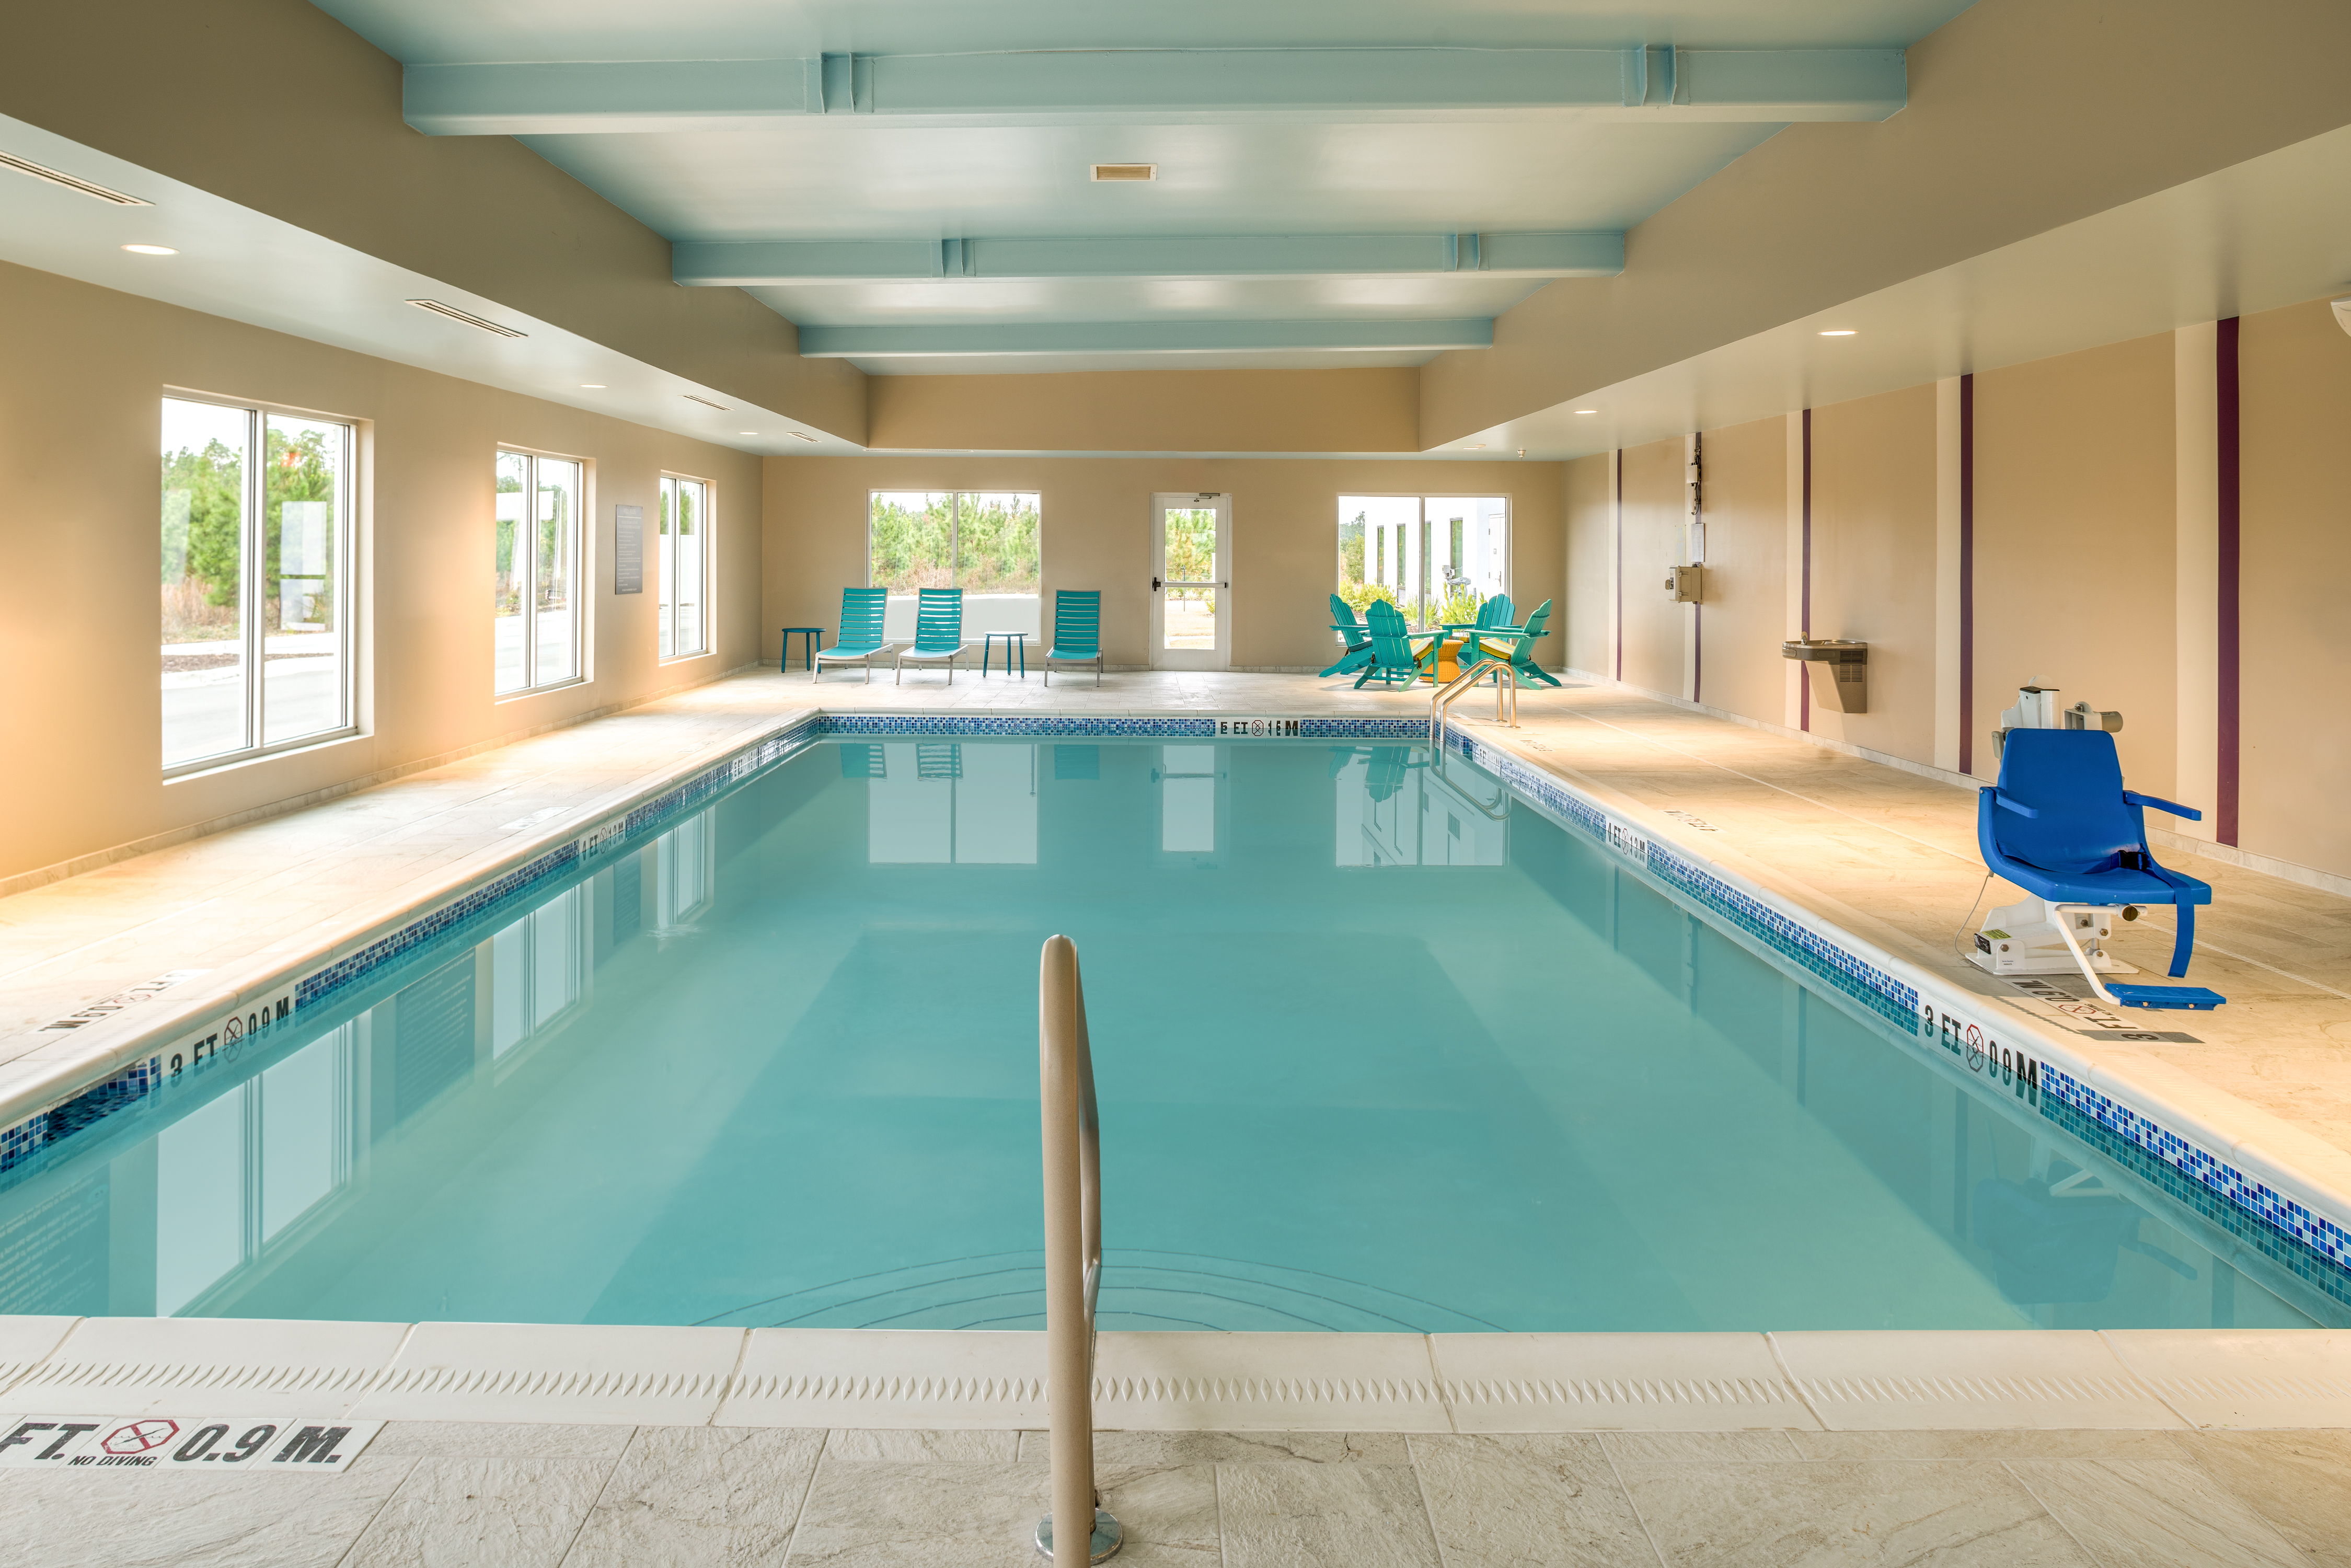 Home2 Suites Hilton Garden Inn Brunswick Pool